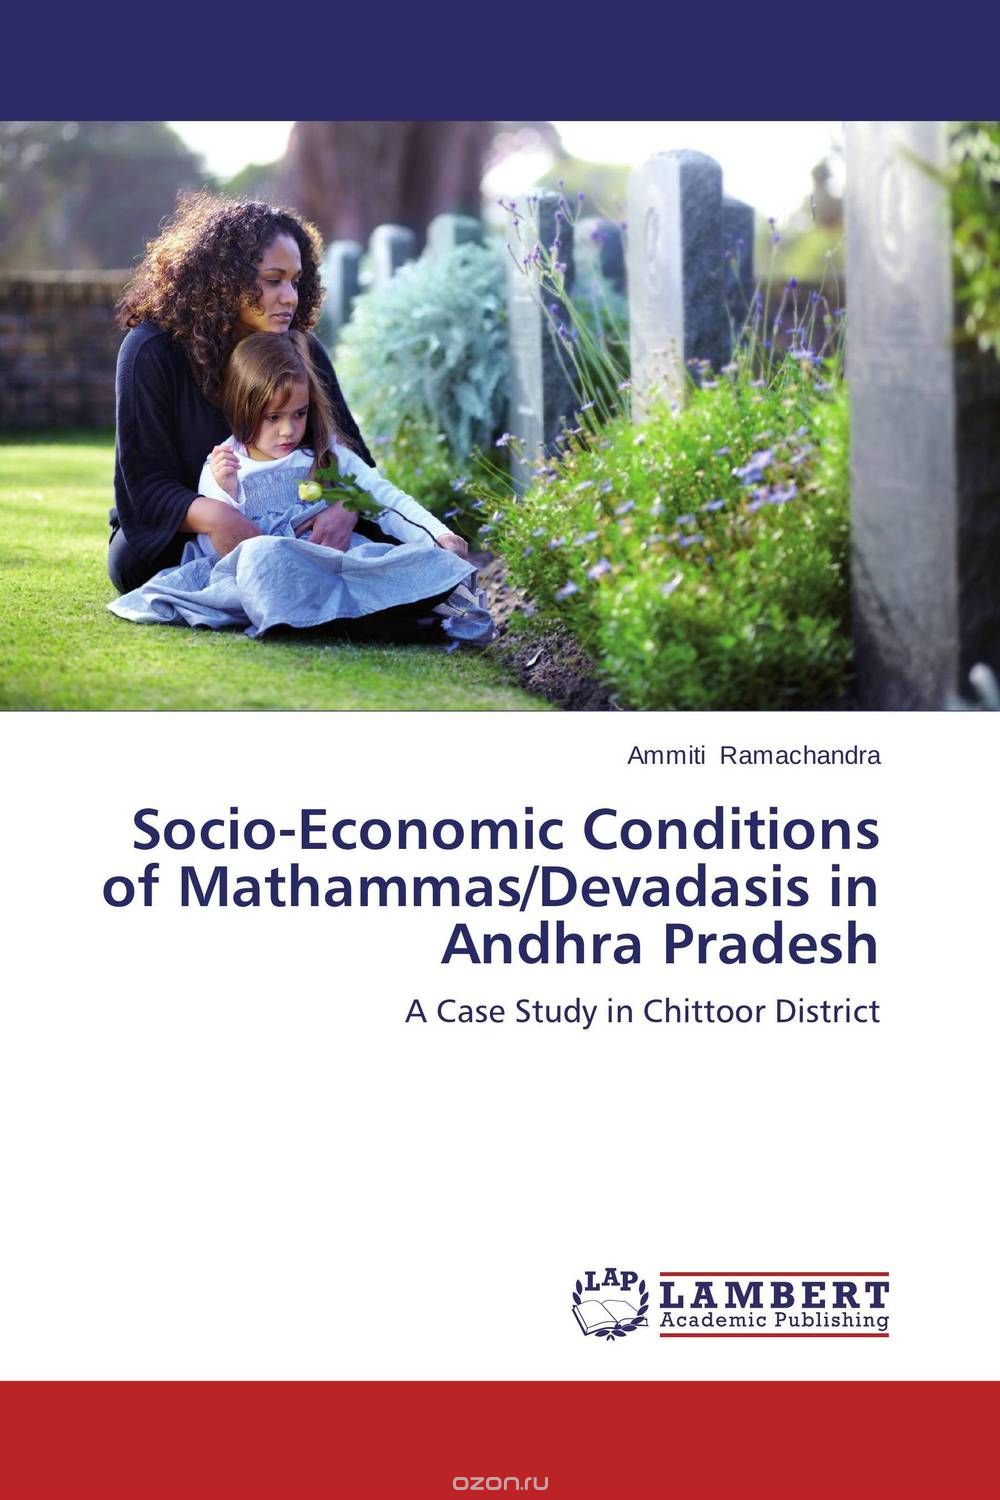 Скачать книгу "Socio-Economic Conditions of Mathammas/Devadasis in Andhra Pradesh"